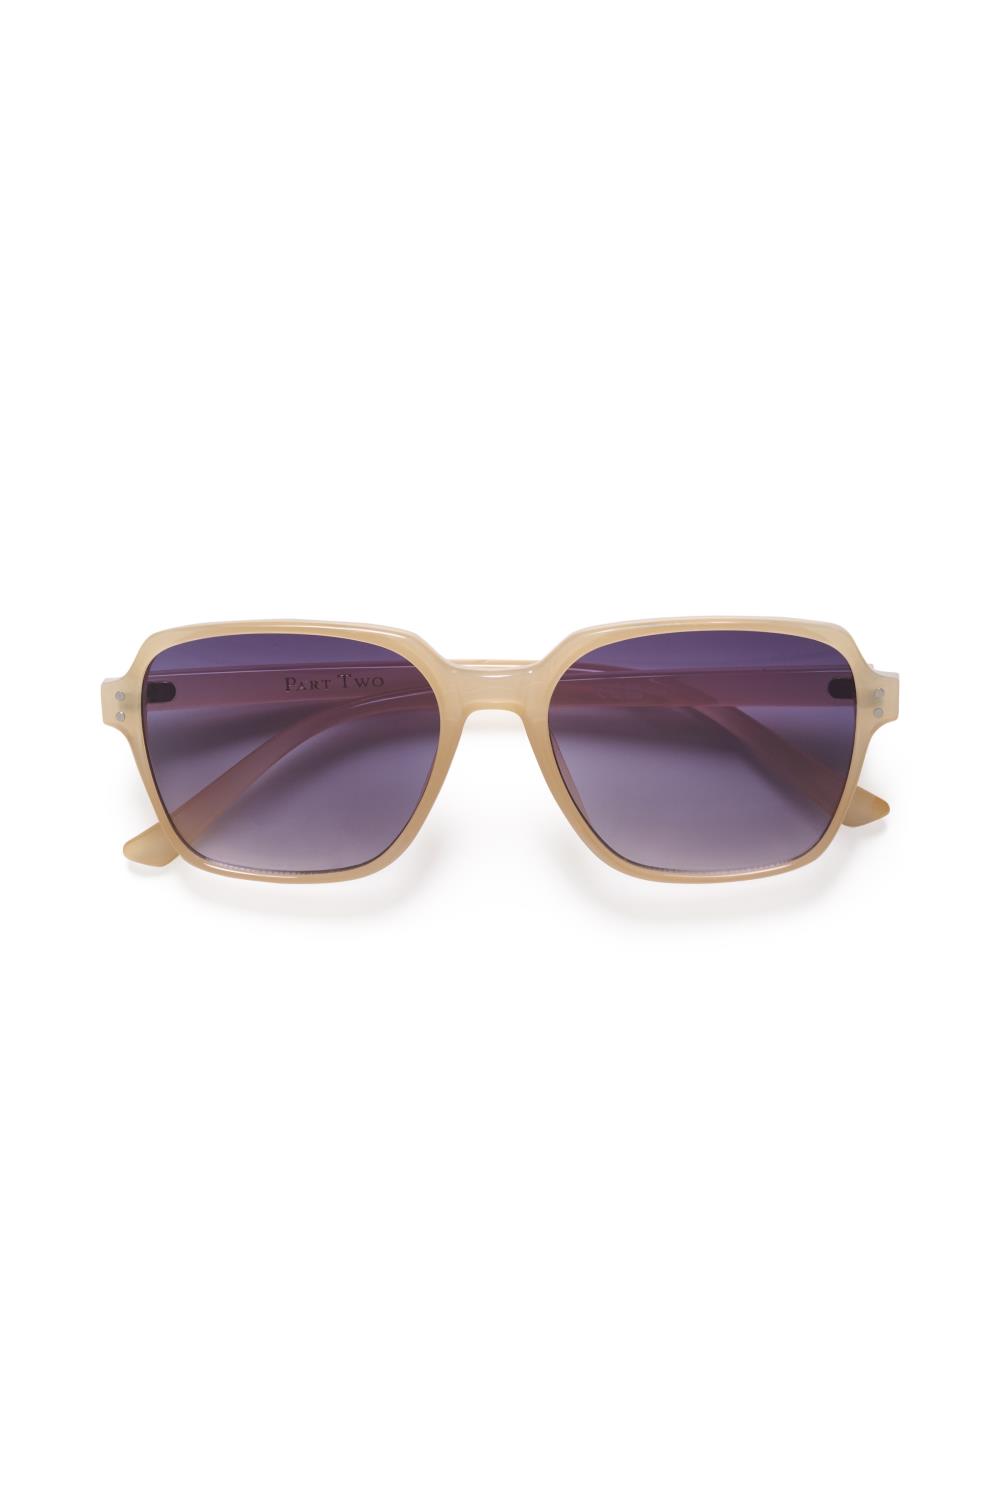 Part Two Eleyna Sunglasses, beige